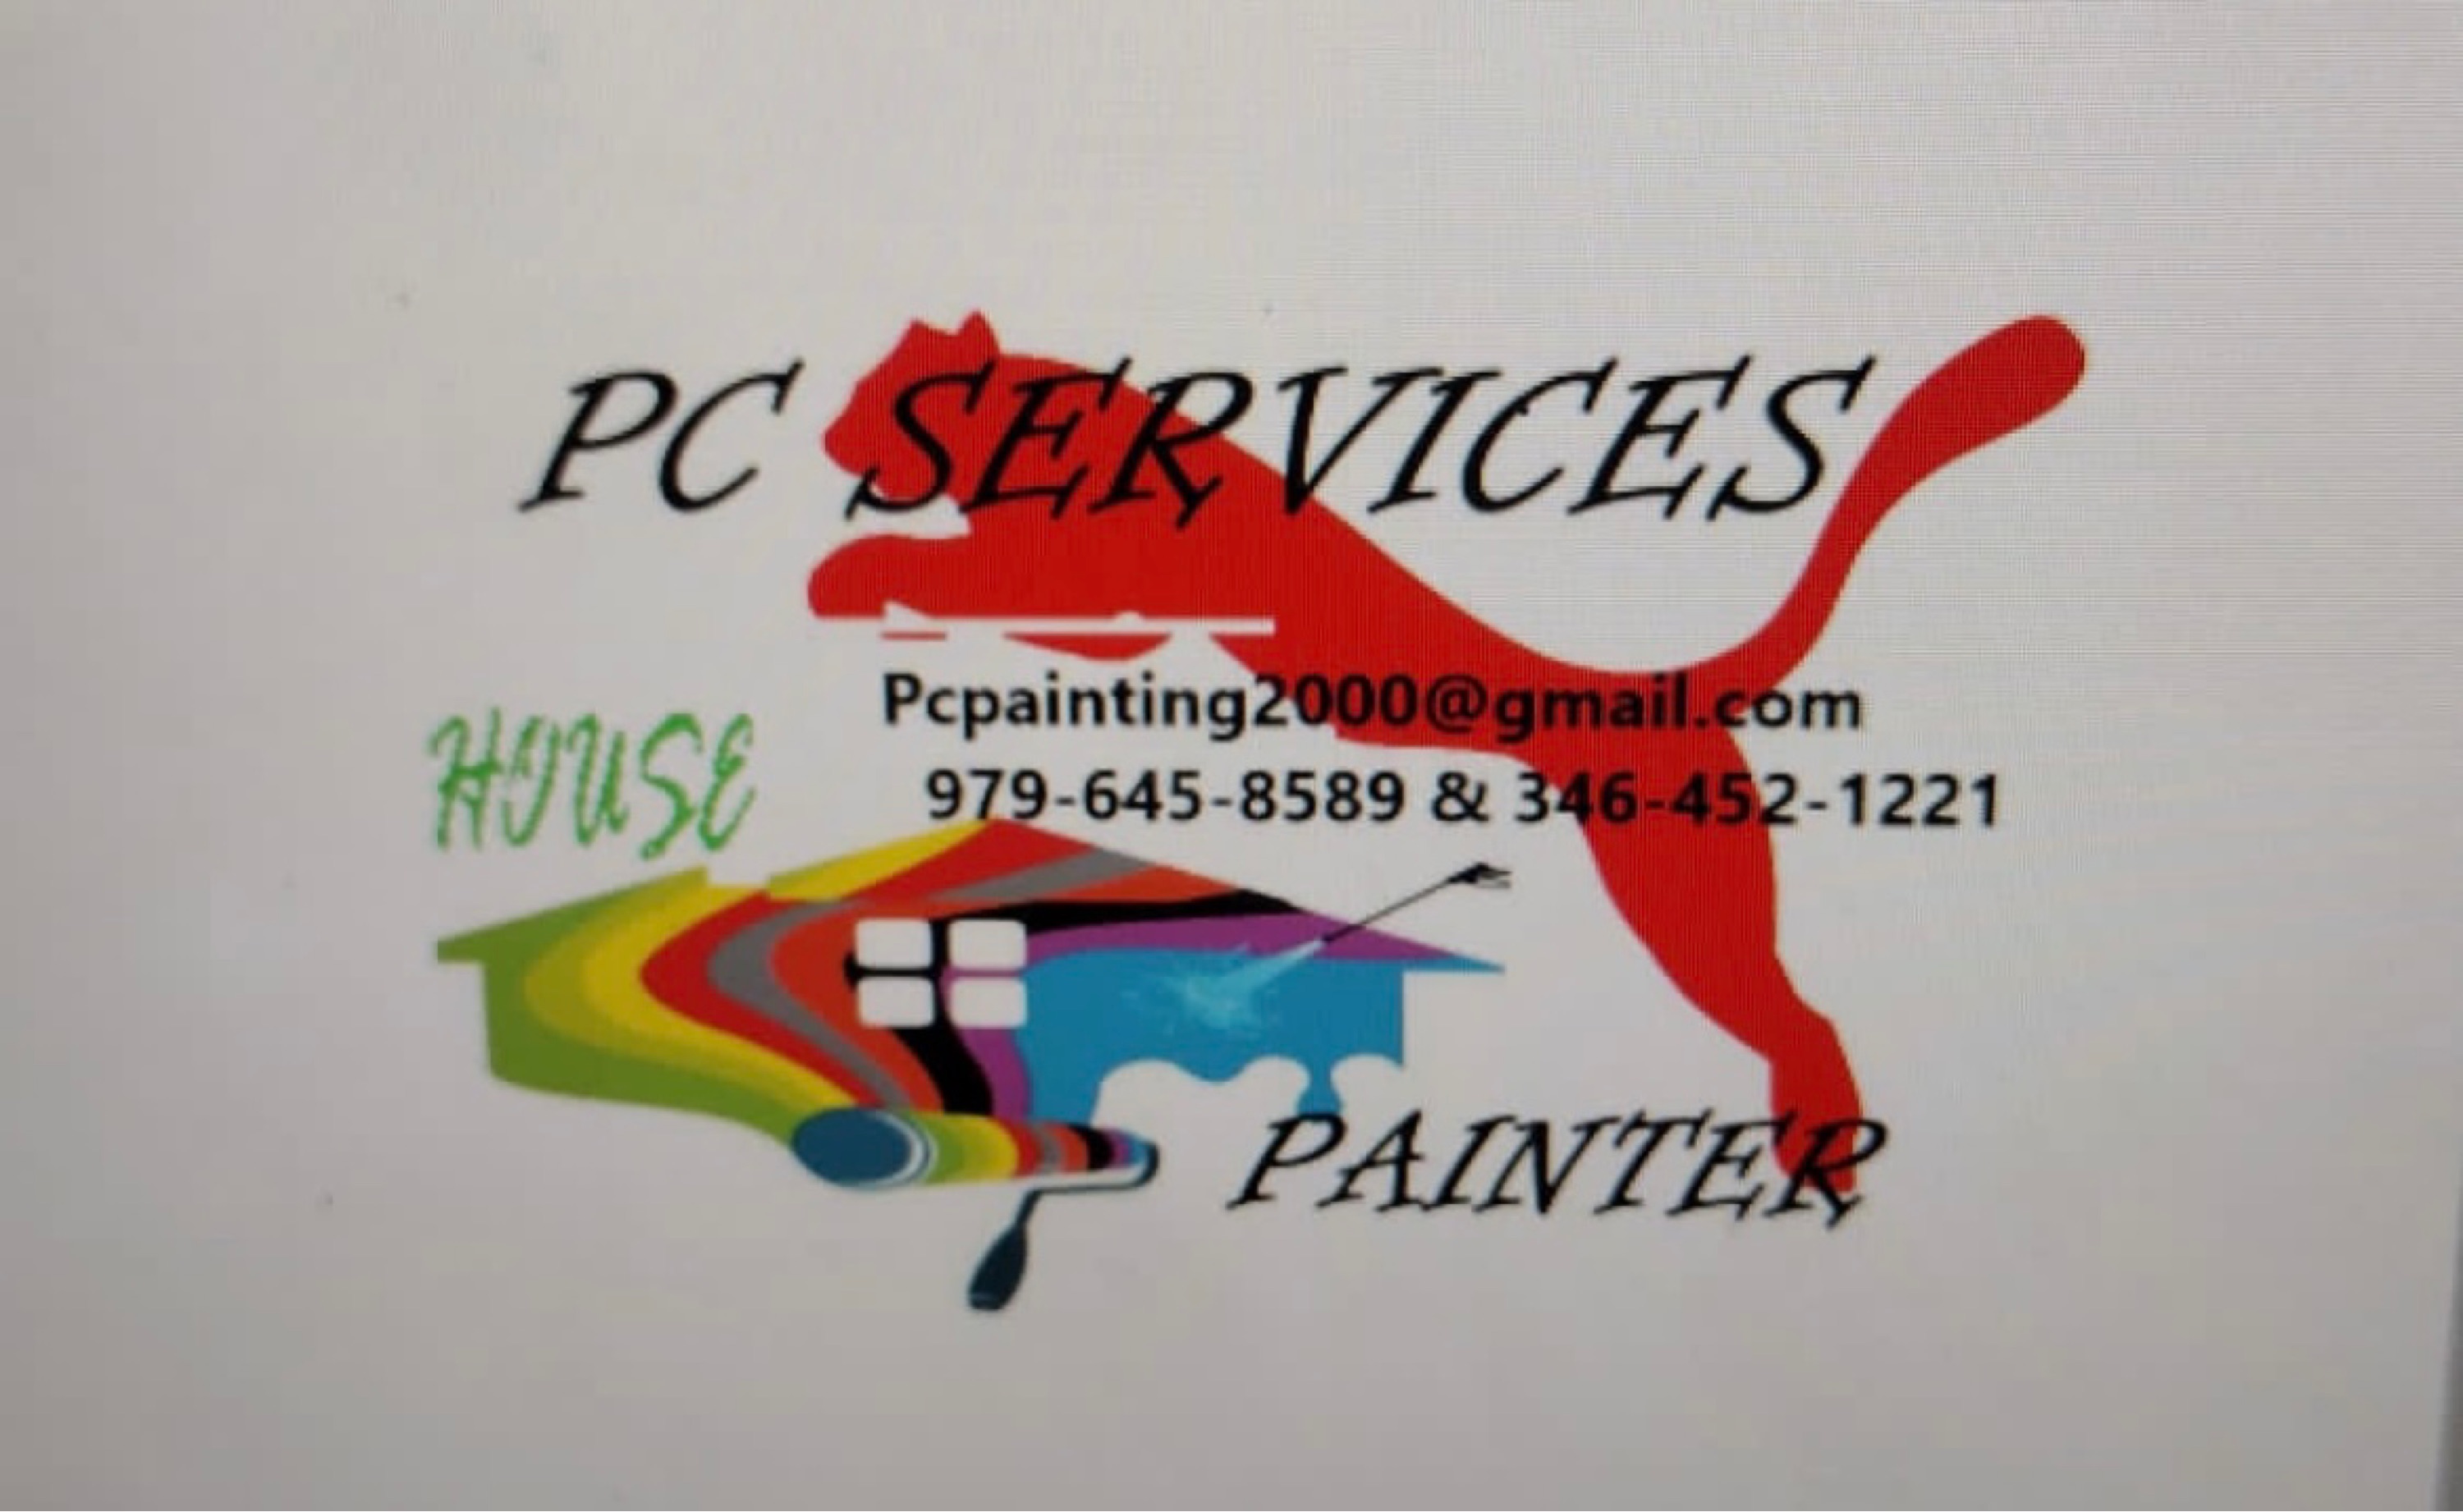 PC Services Logo